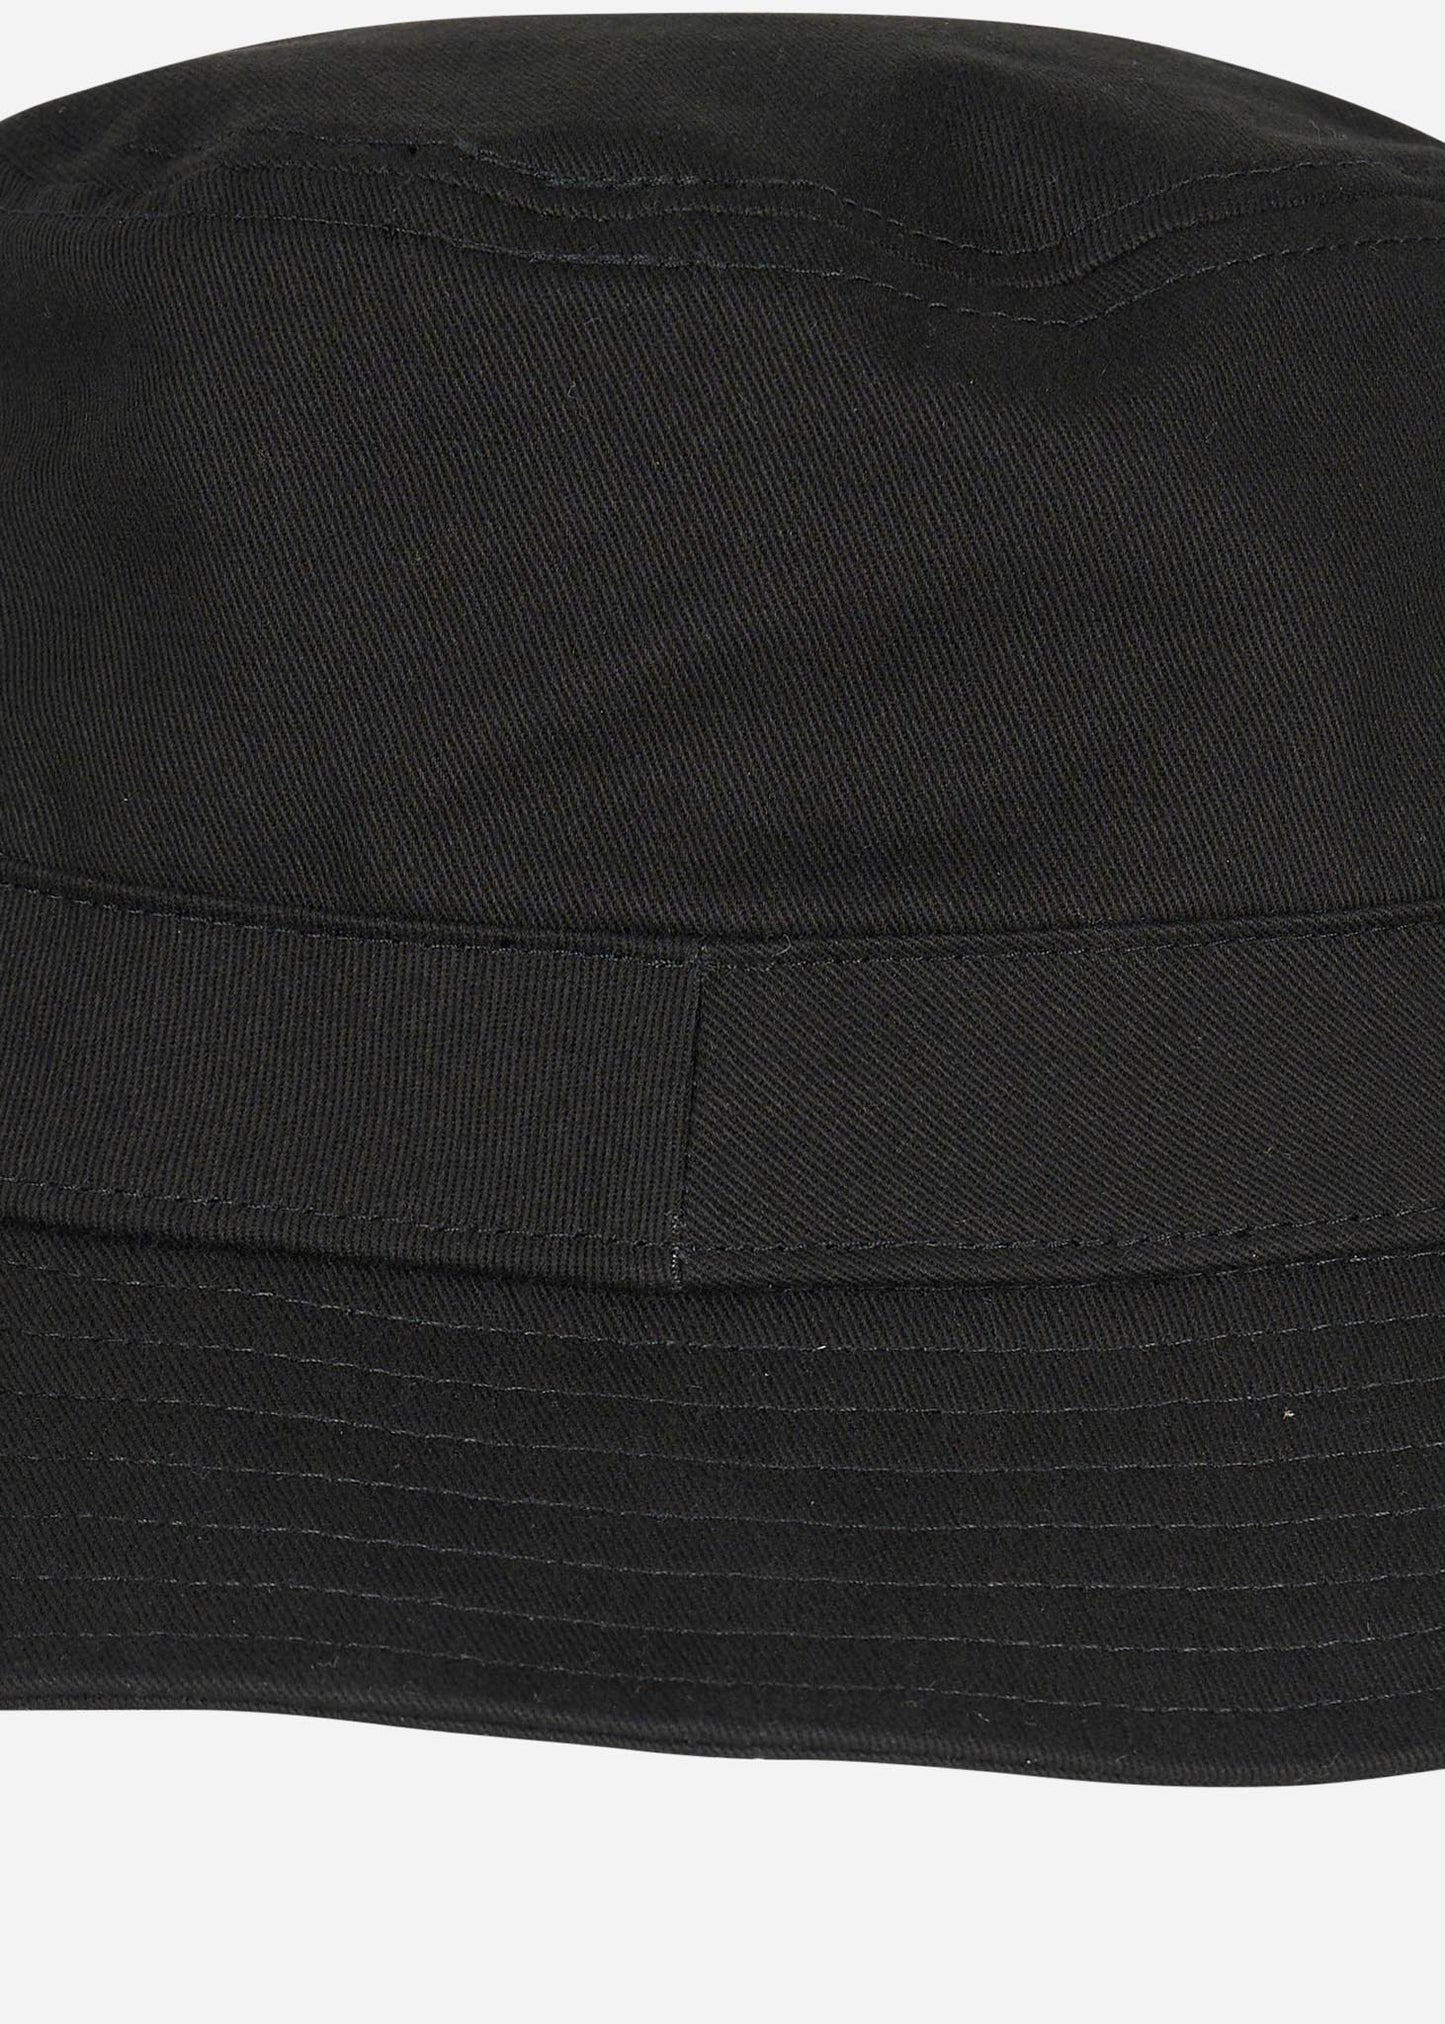 Barbour International Bucket Hats  Norton drill sports hat - black 